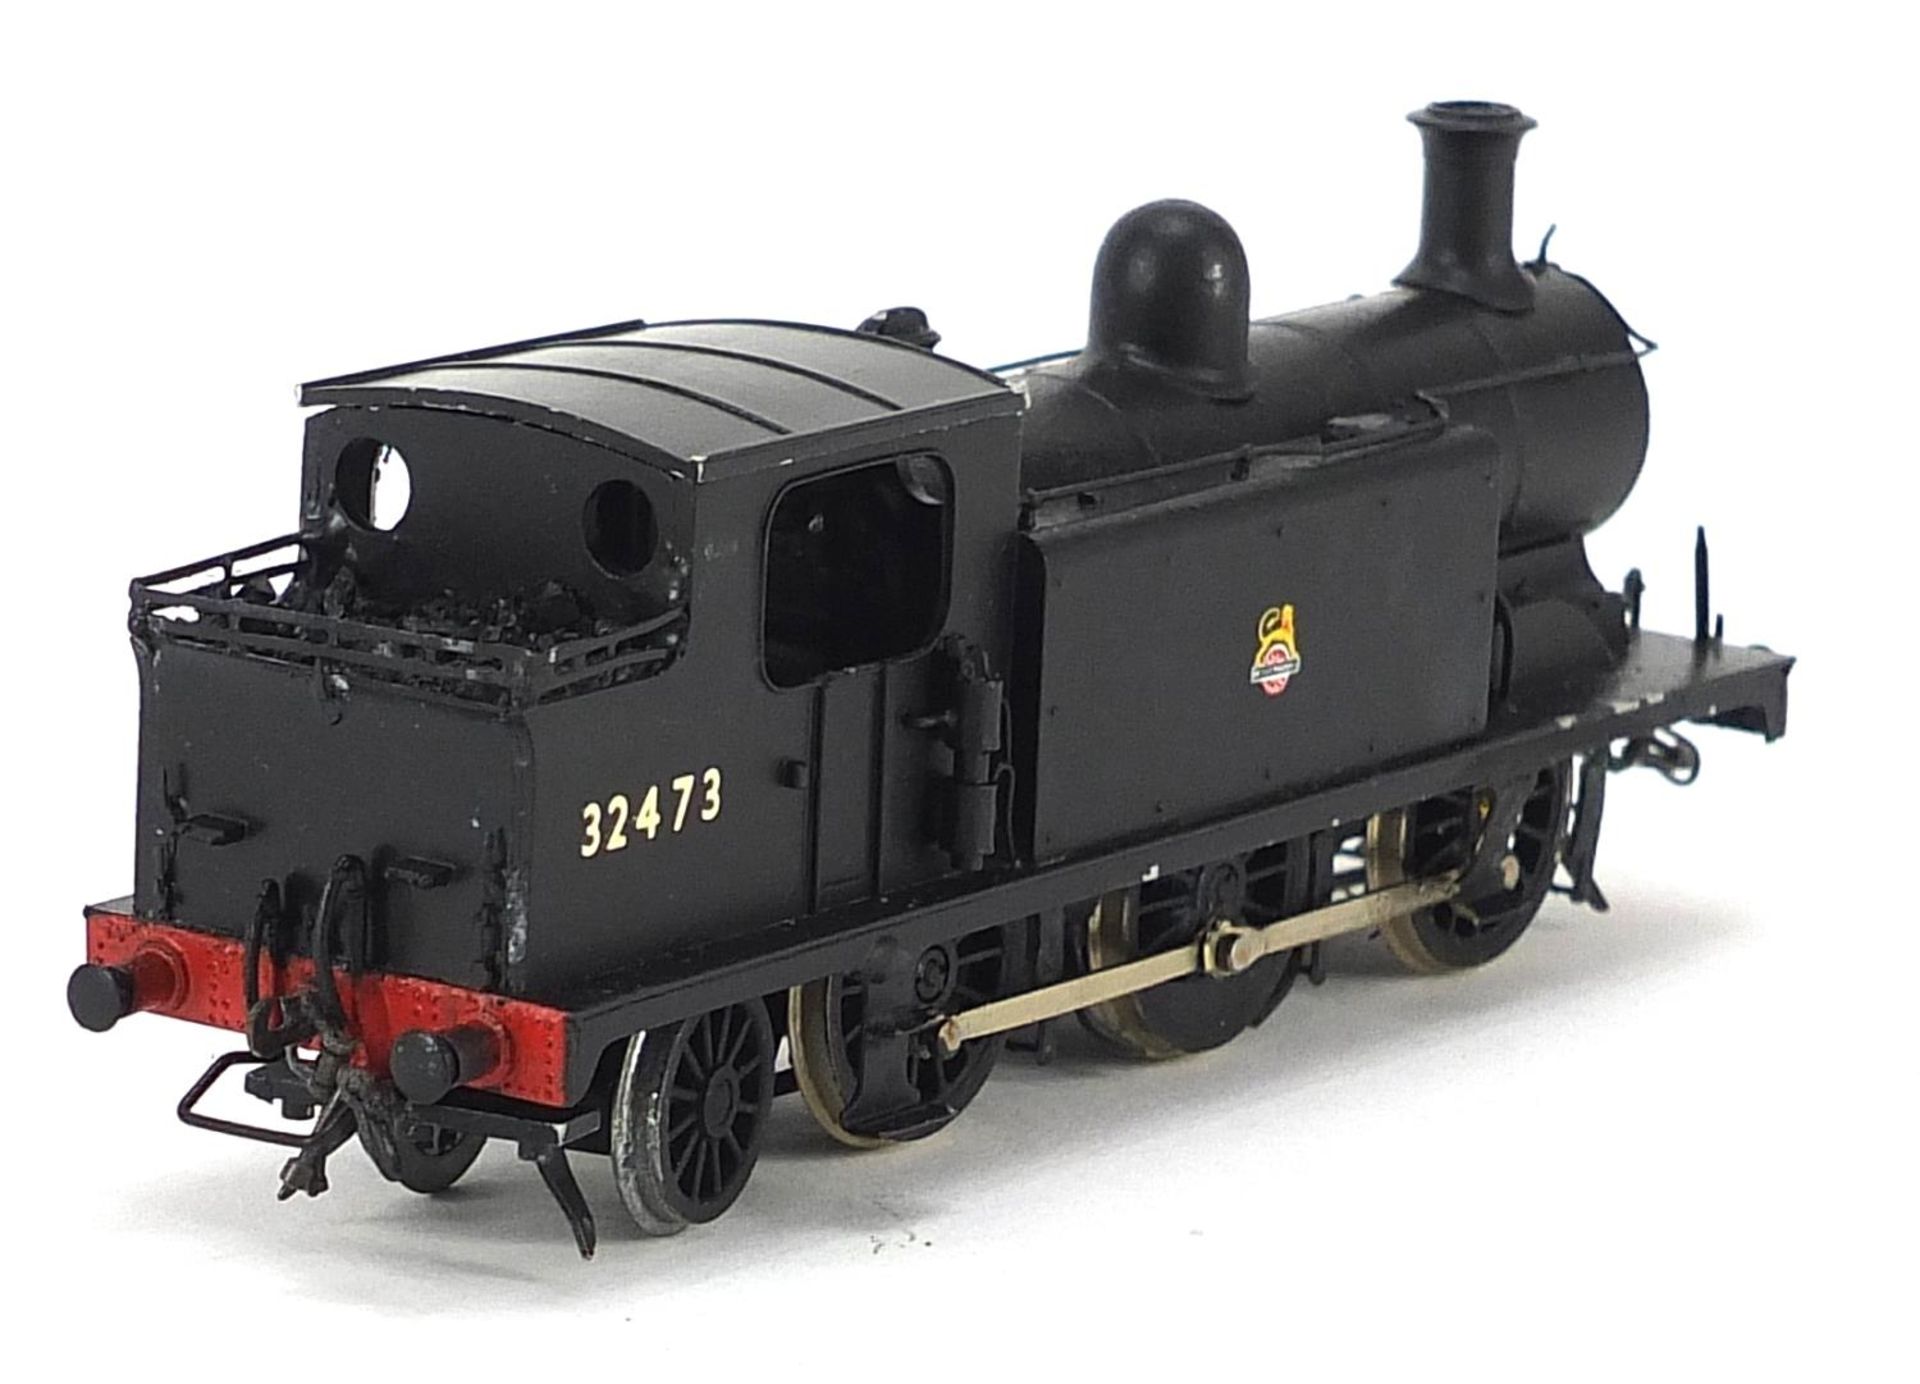 00 gauge model railway 0-6-2 T kit British Railway locomotive with box - Image 3 of 4